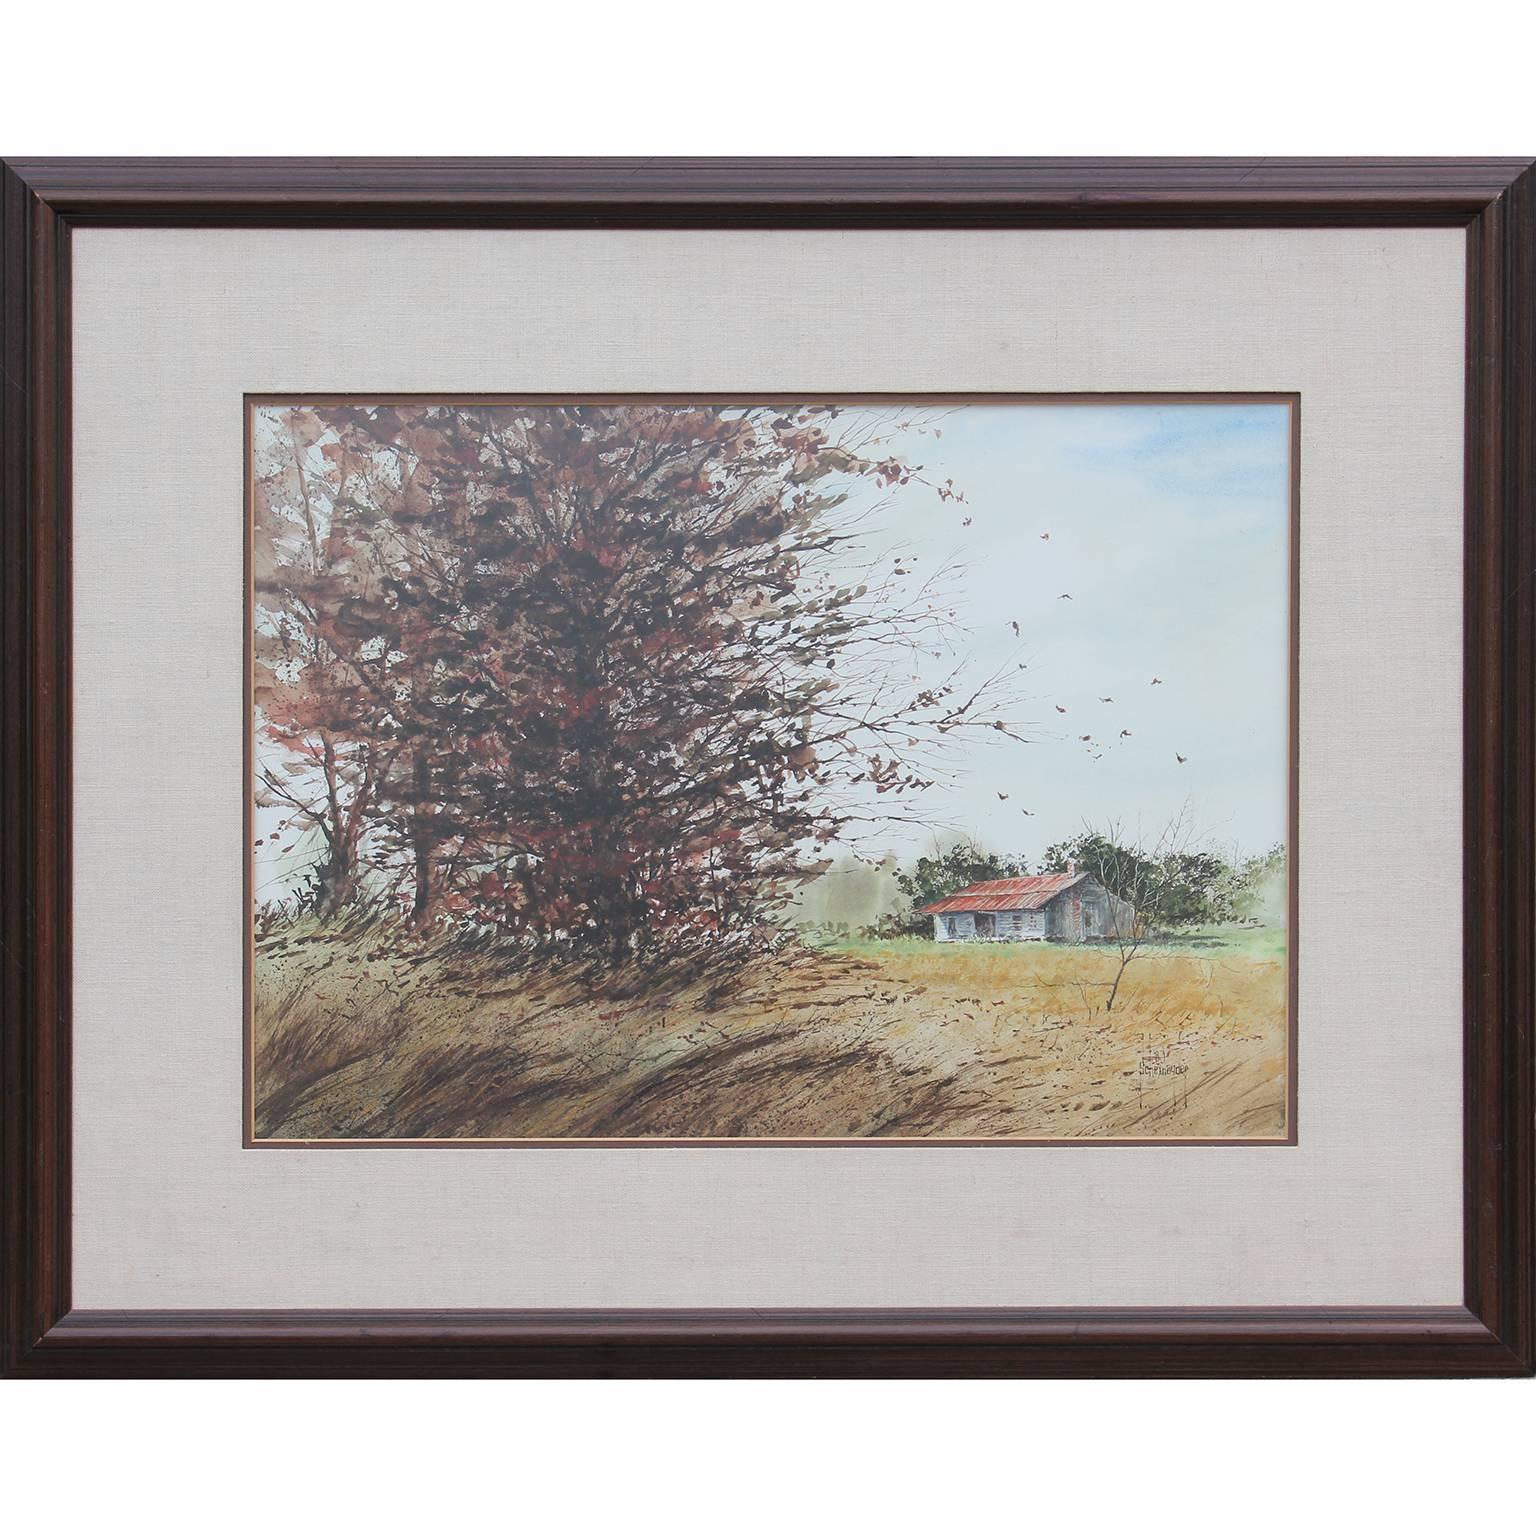 A.J. Schexnayder Landscape Art - "West"- Red Farmhouse in Field